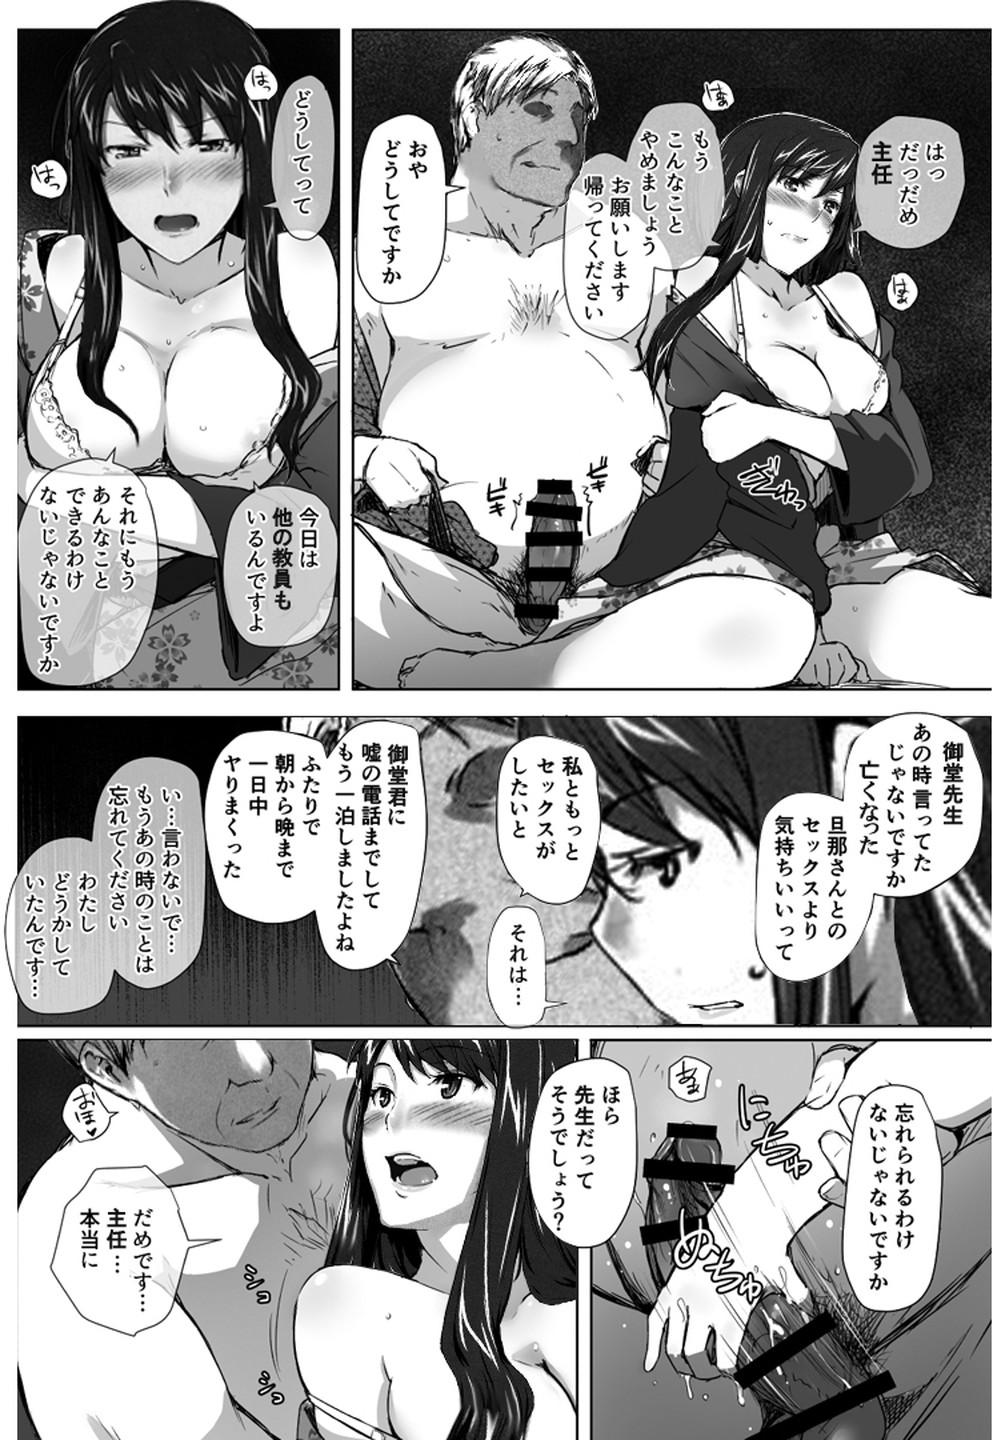 Sakiko-san in delusion Vol.1 Ver.1.1 ~Sakiko-san's circumstance at an educational training~ Stupid Sakiko (collage) on-going 46